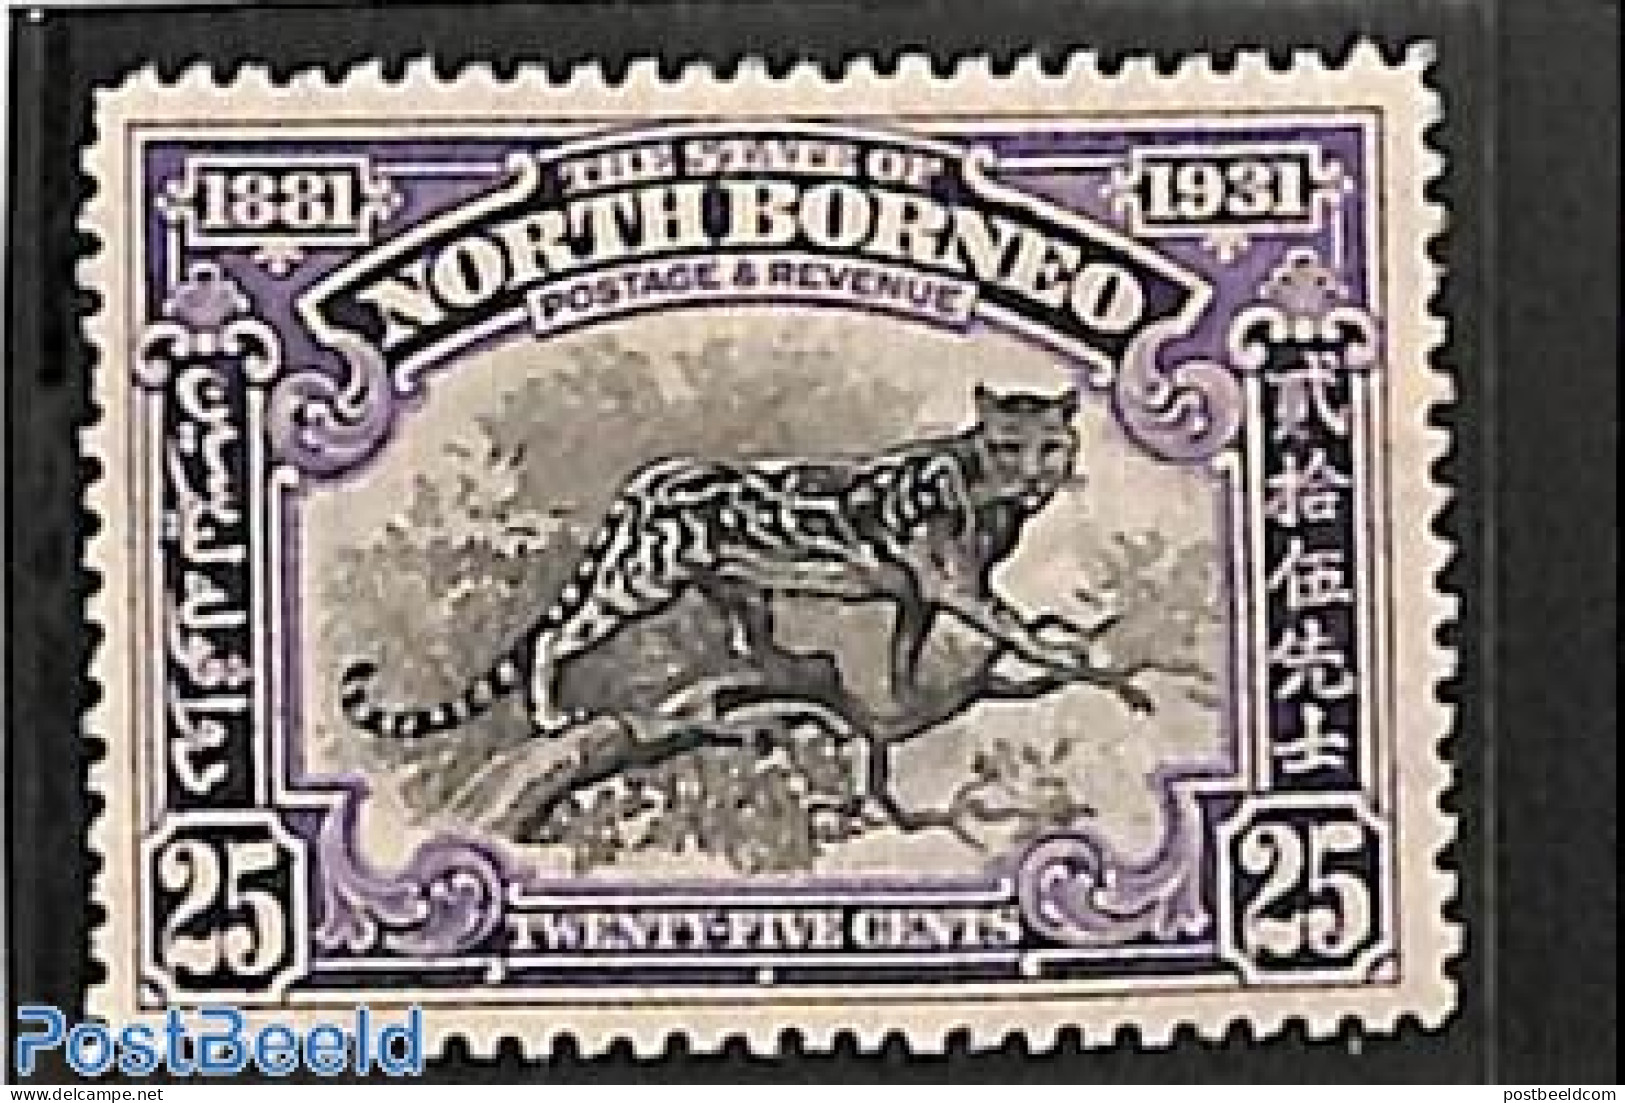 North Borneo 1931 25c, Stamp Out Of Set, Unused (hinged), Nature - Cat Family - North Borneo (...-1963)